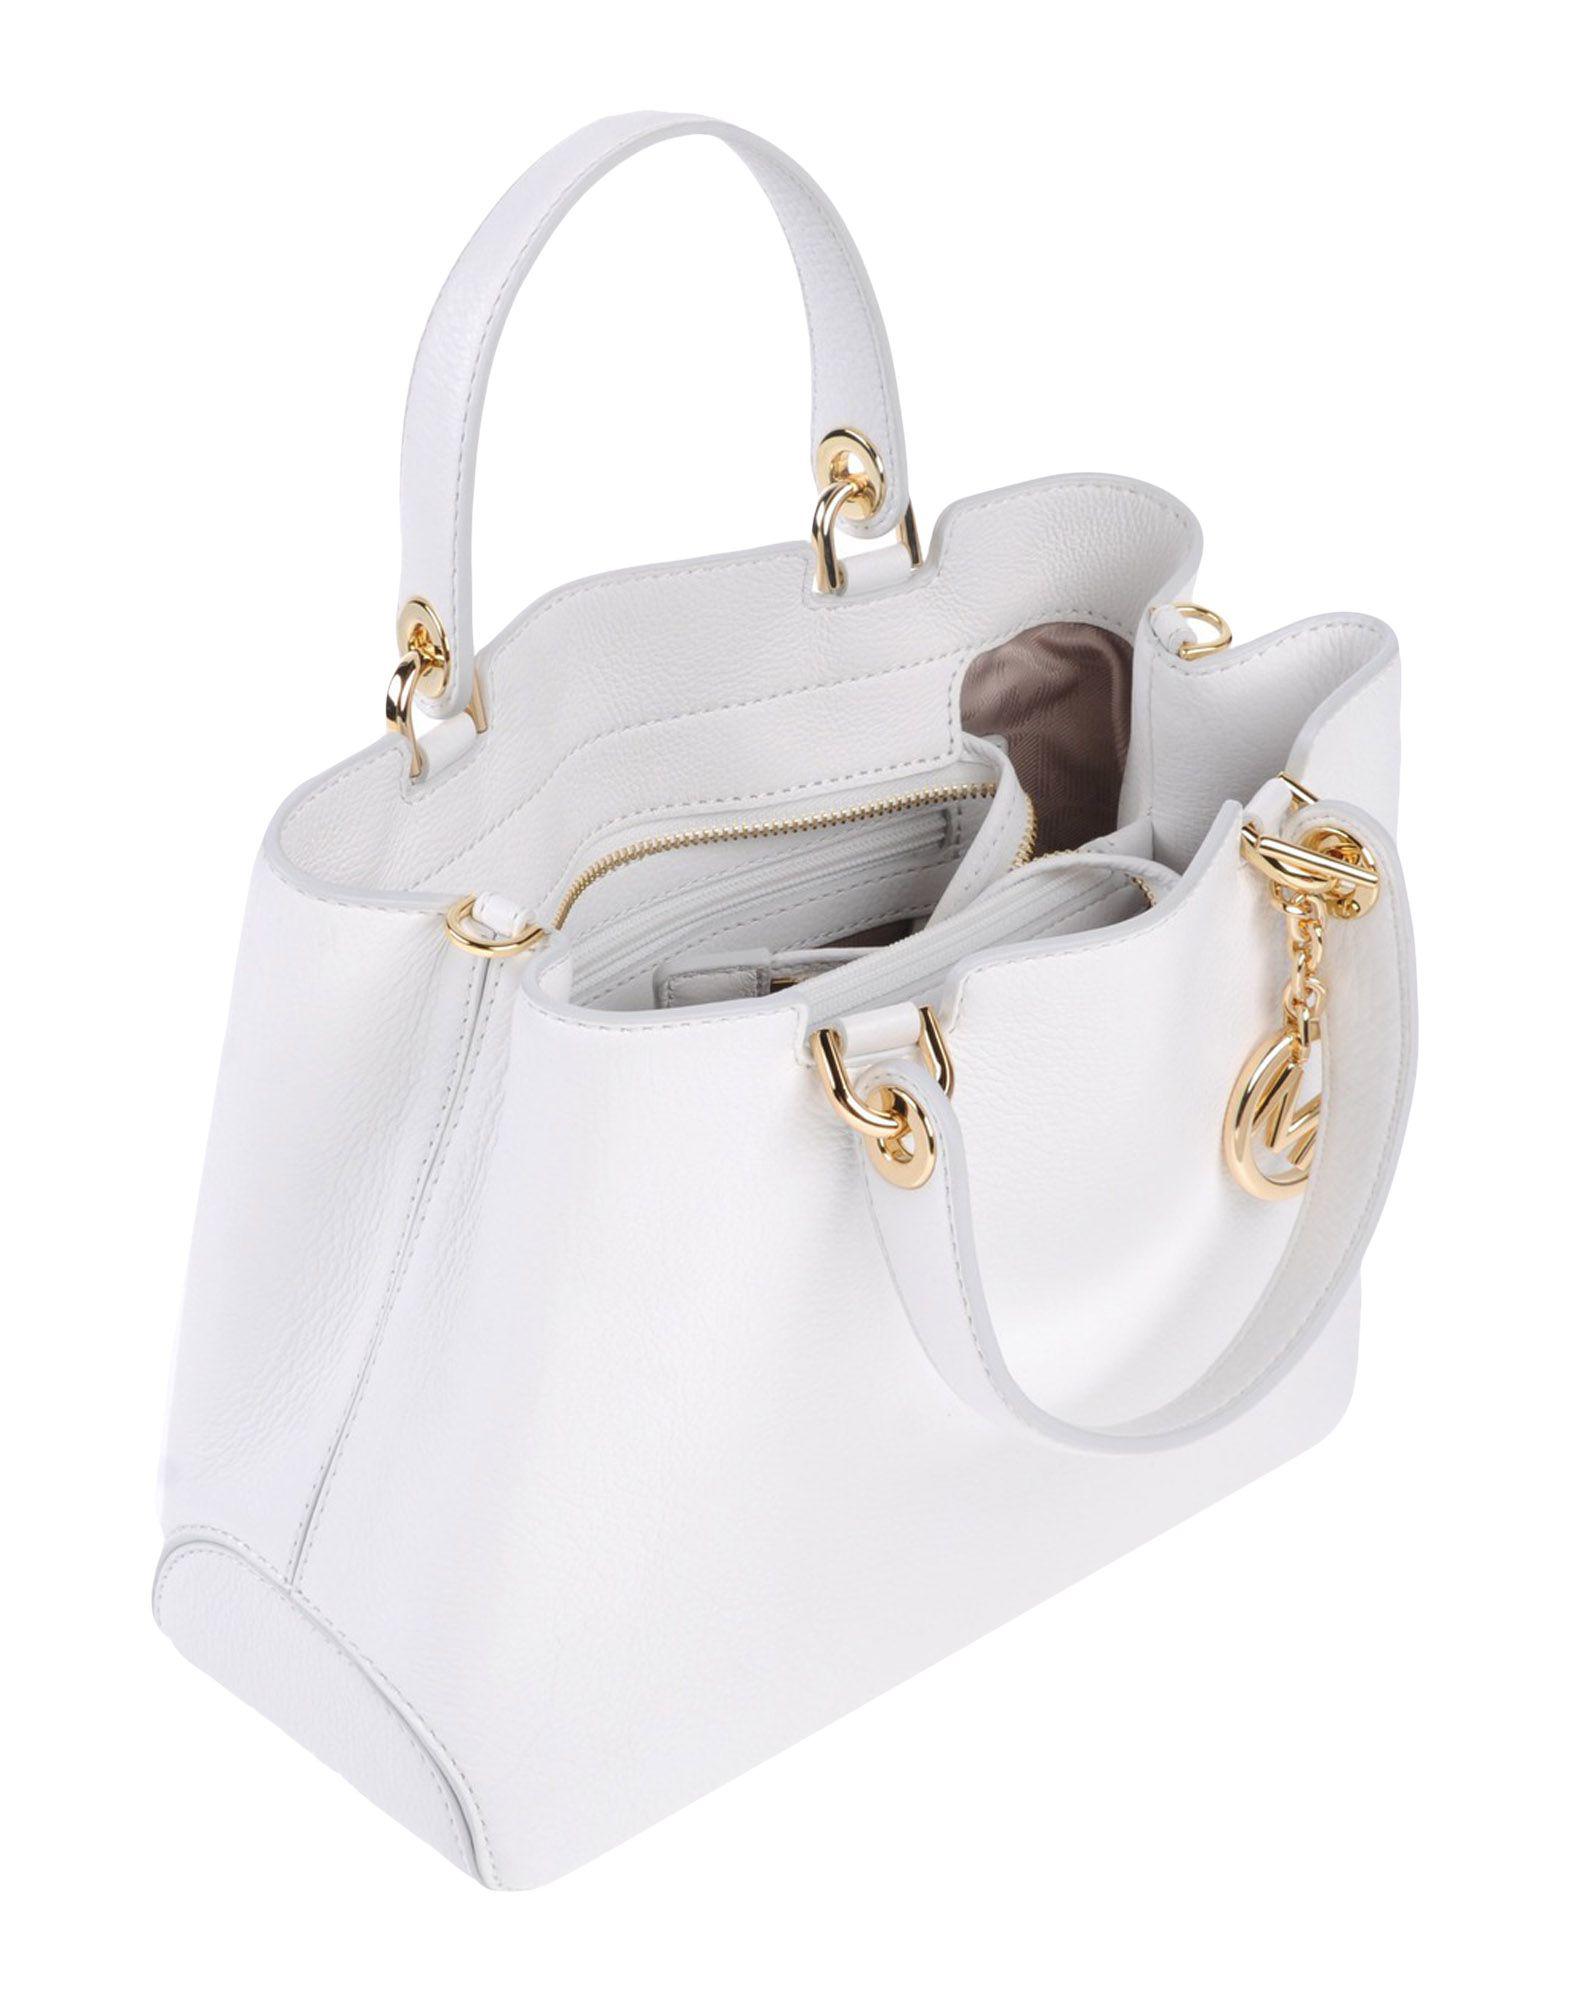 MICHAEL Michael Kors Handbags in White - Lyst